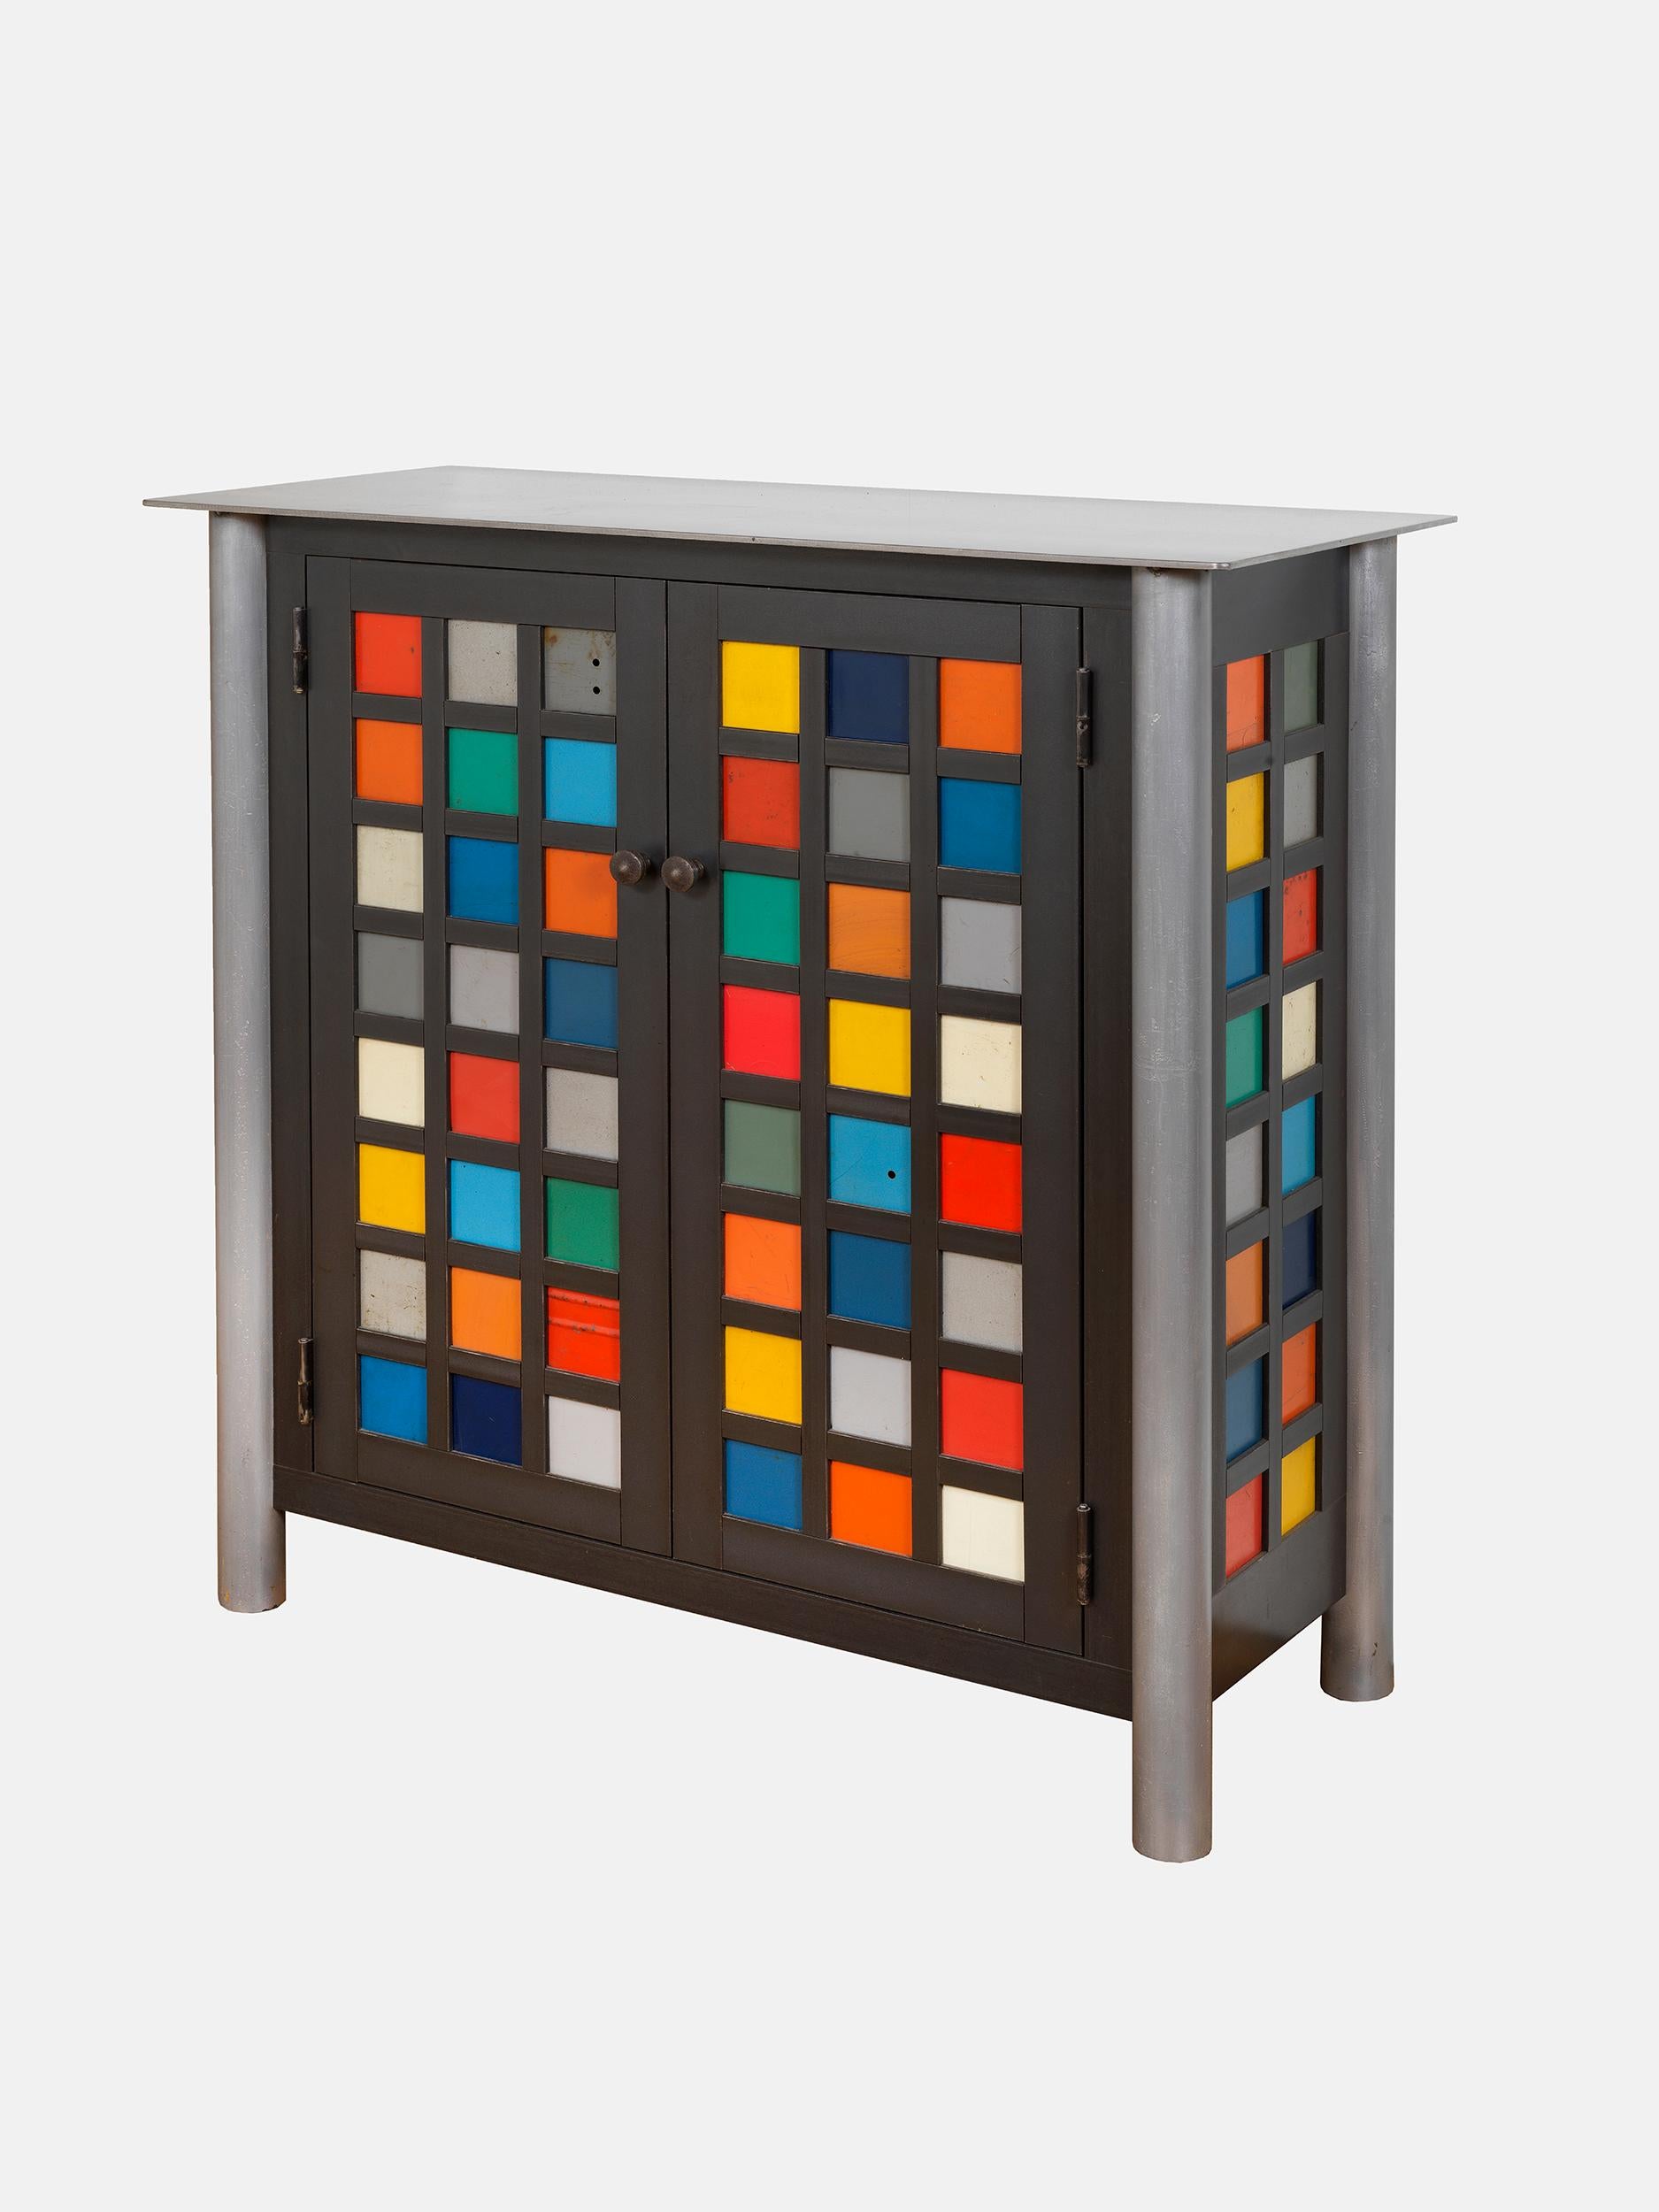 Two Door Mulit-color Quilt Cupboard - Steel Furniture, Gee's Bend Quilt Design - Art by Jim Rose